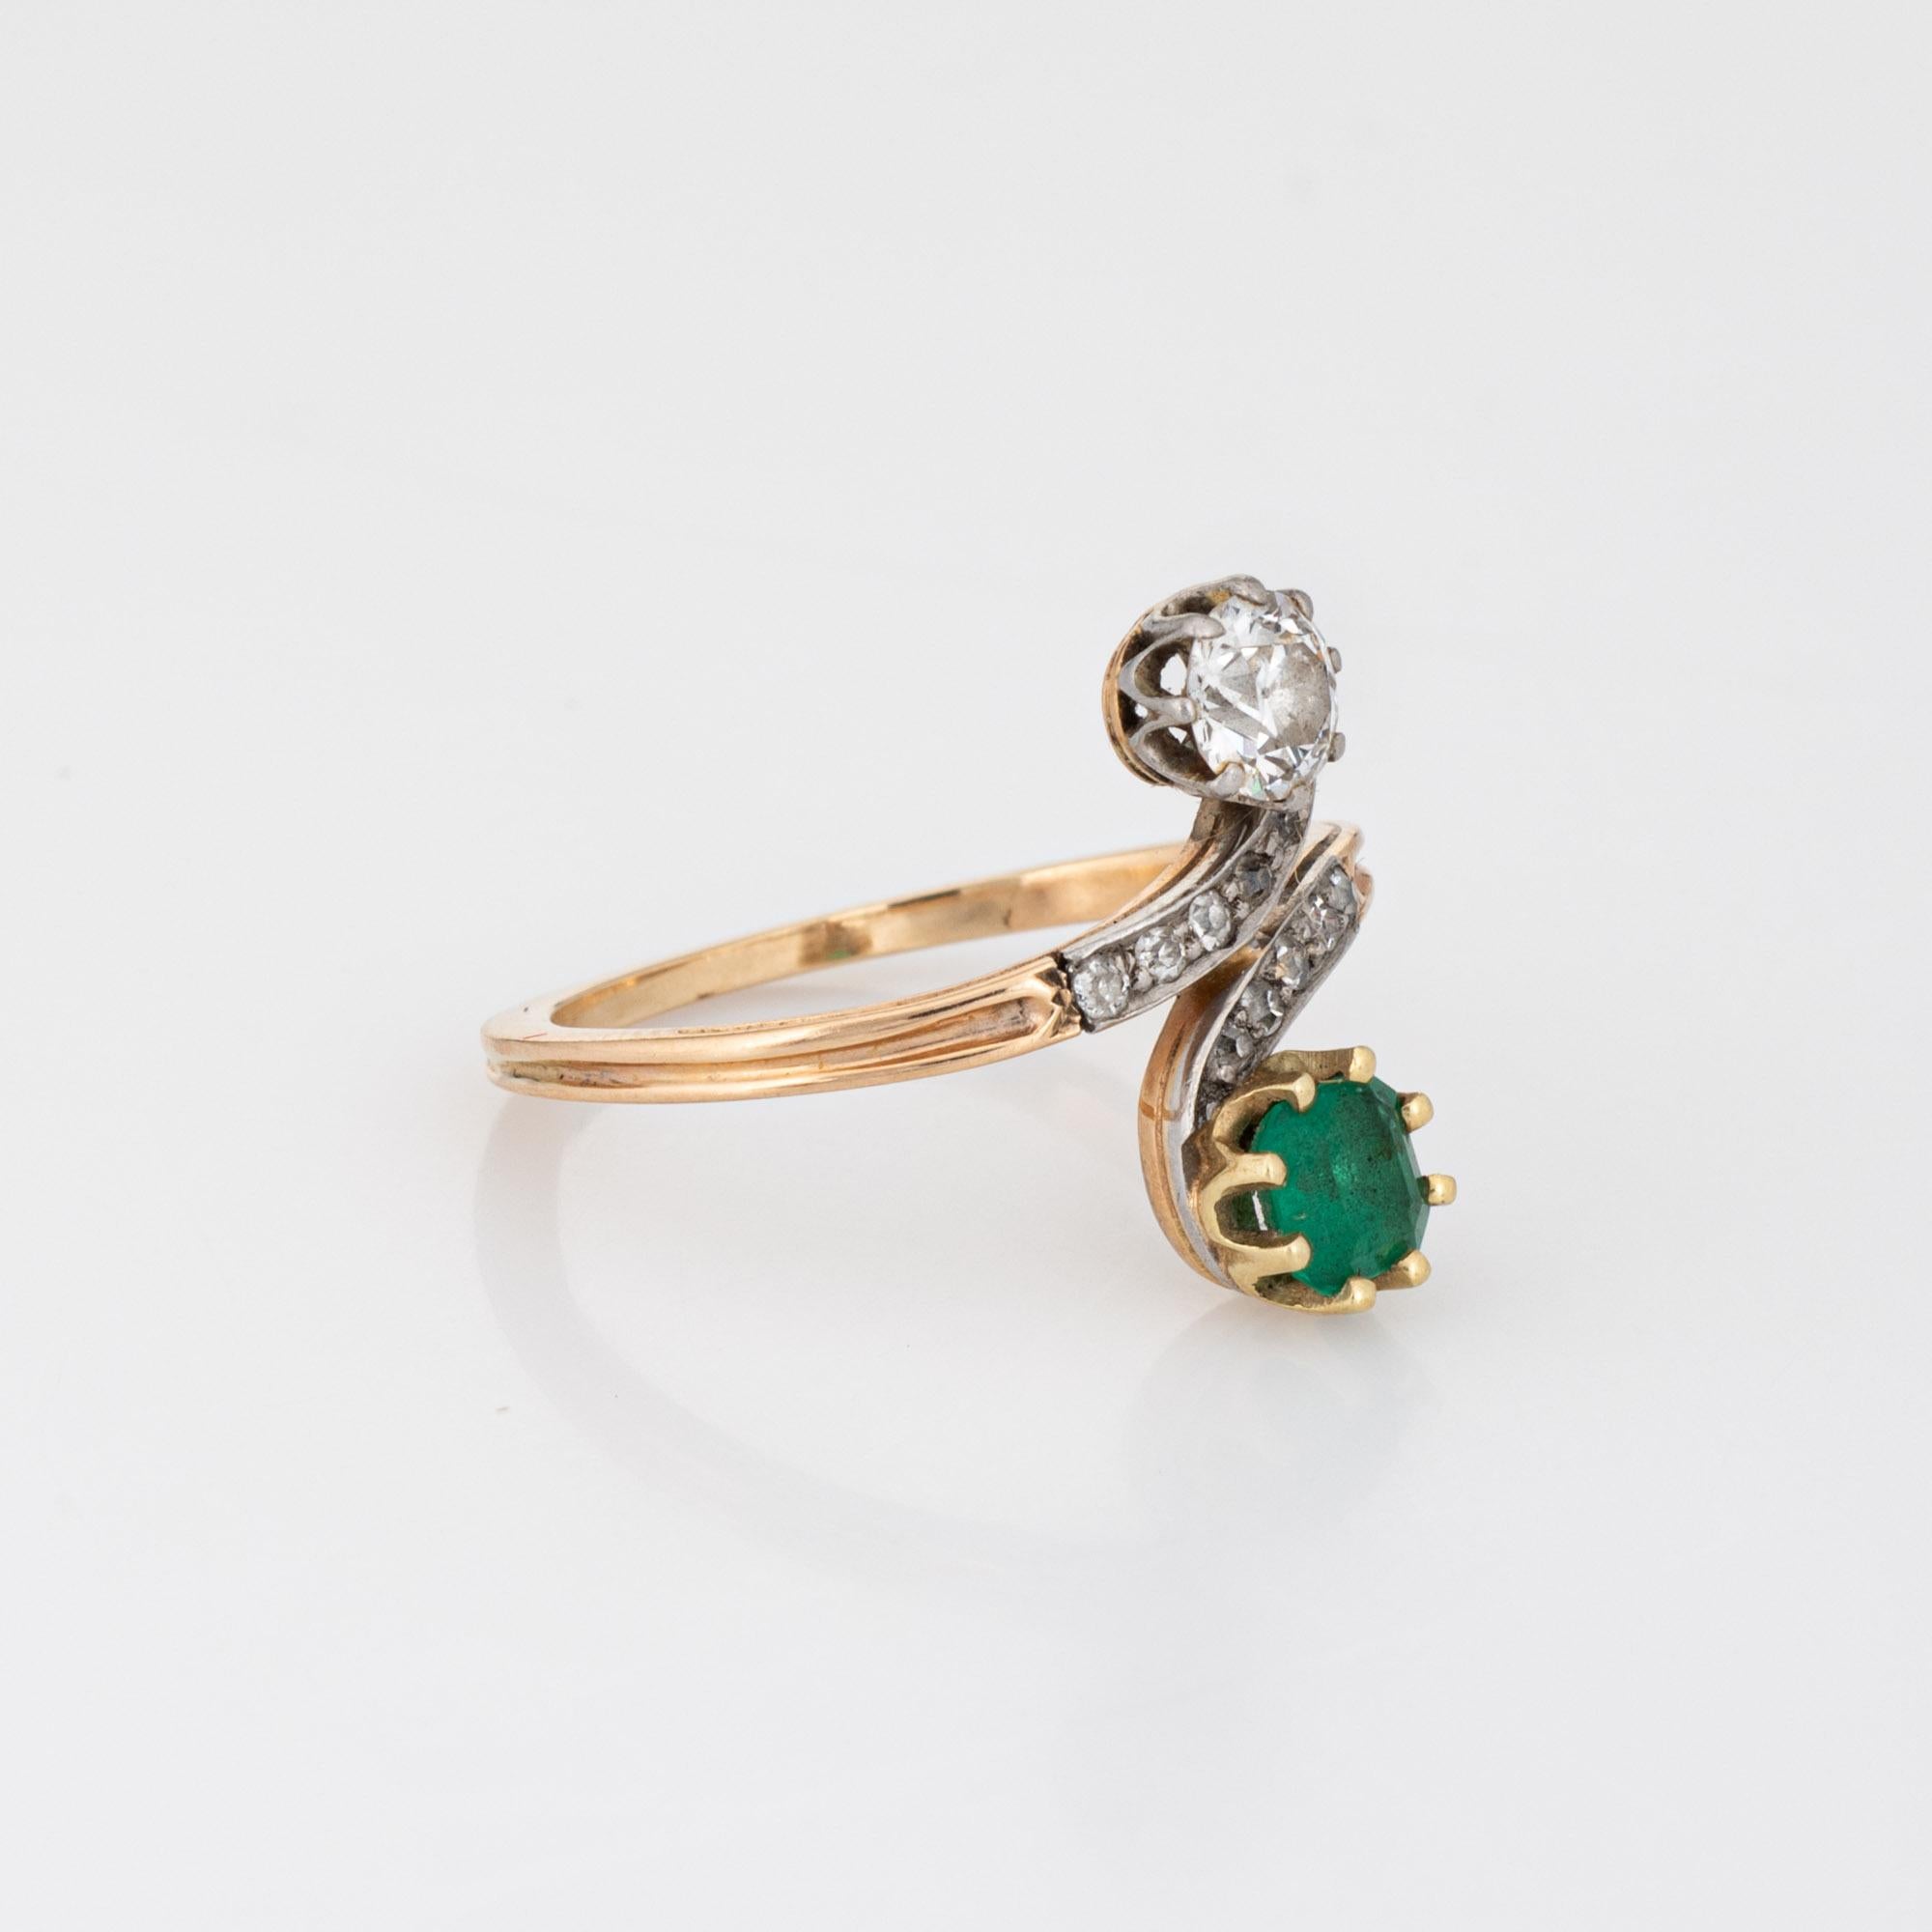 Old Mine Cut Antique Edwardian Diamond Emerald Ring Moi et Toi 14k Gold Gemstone Band Sz 6.5 For Sale